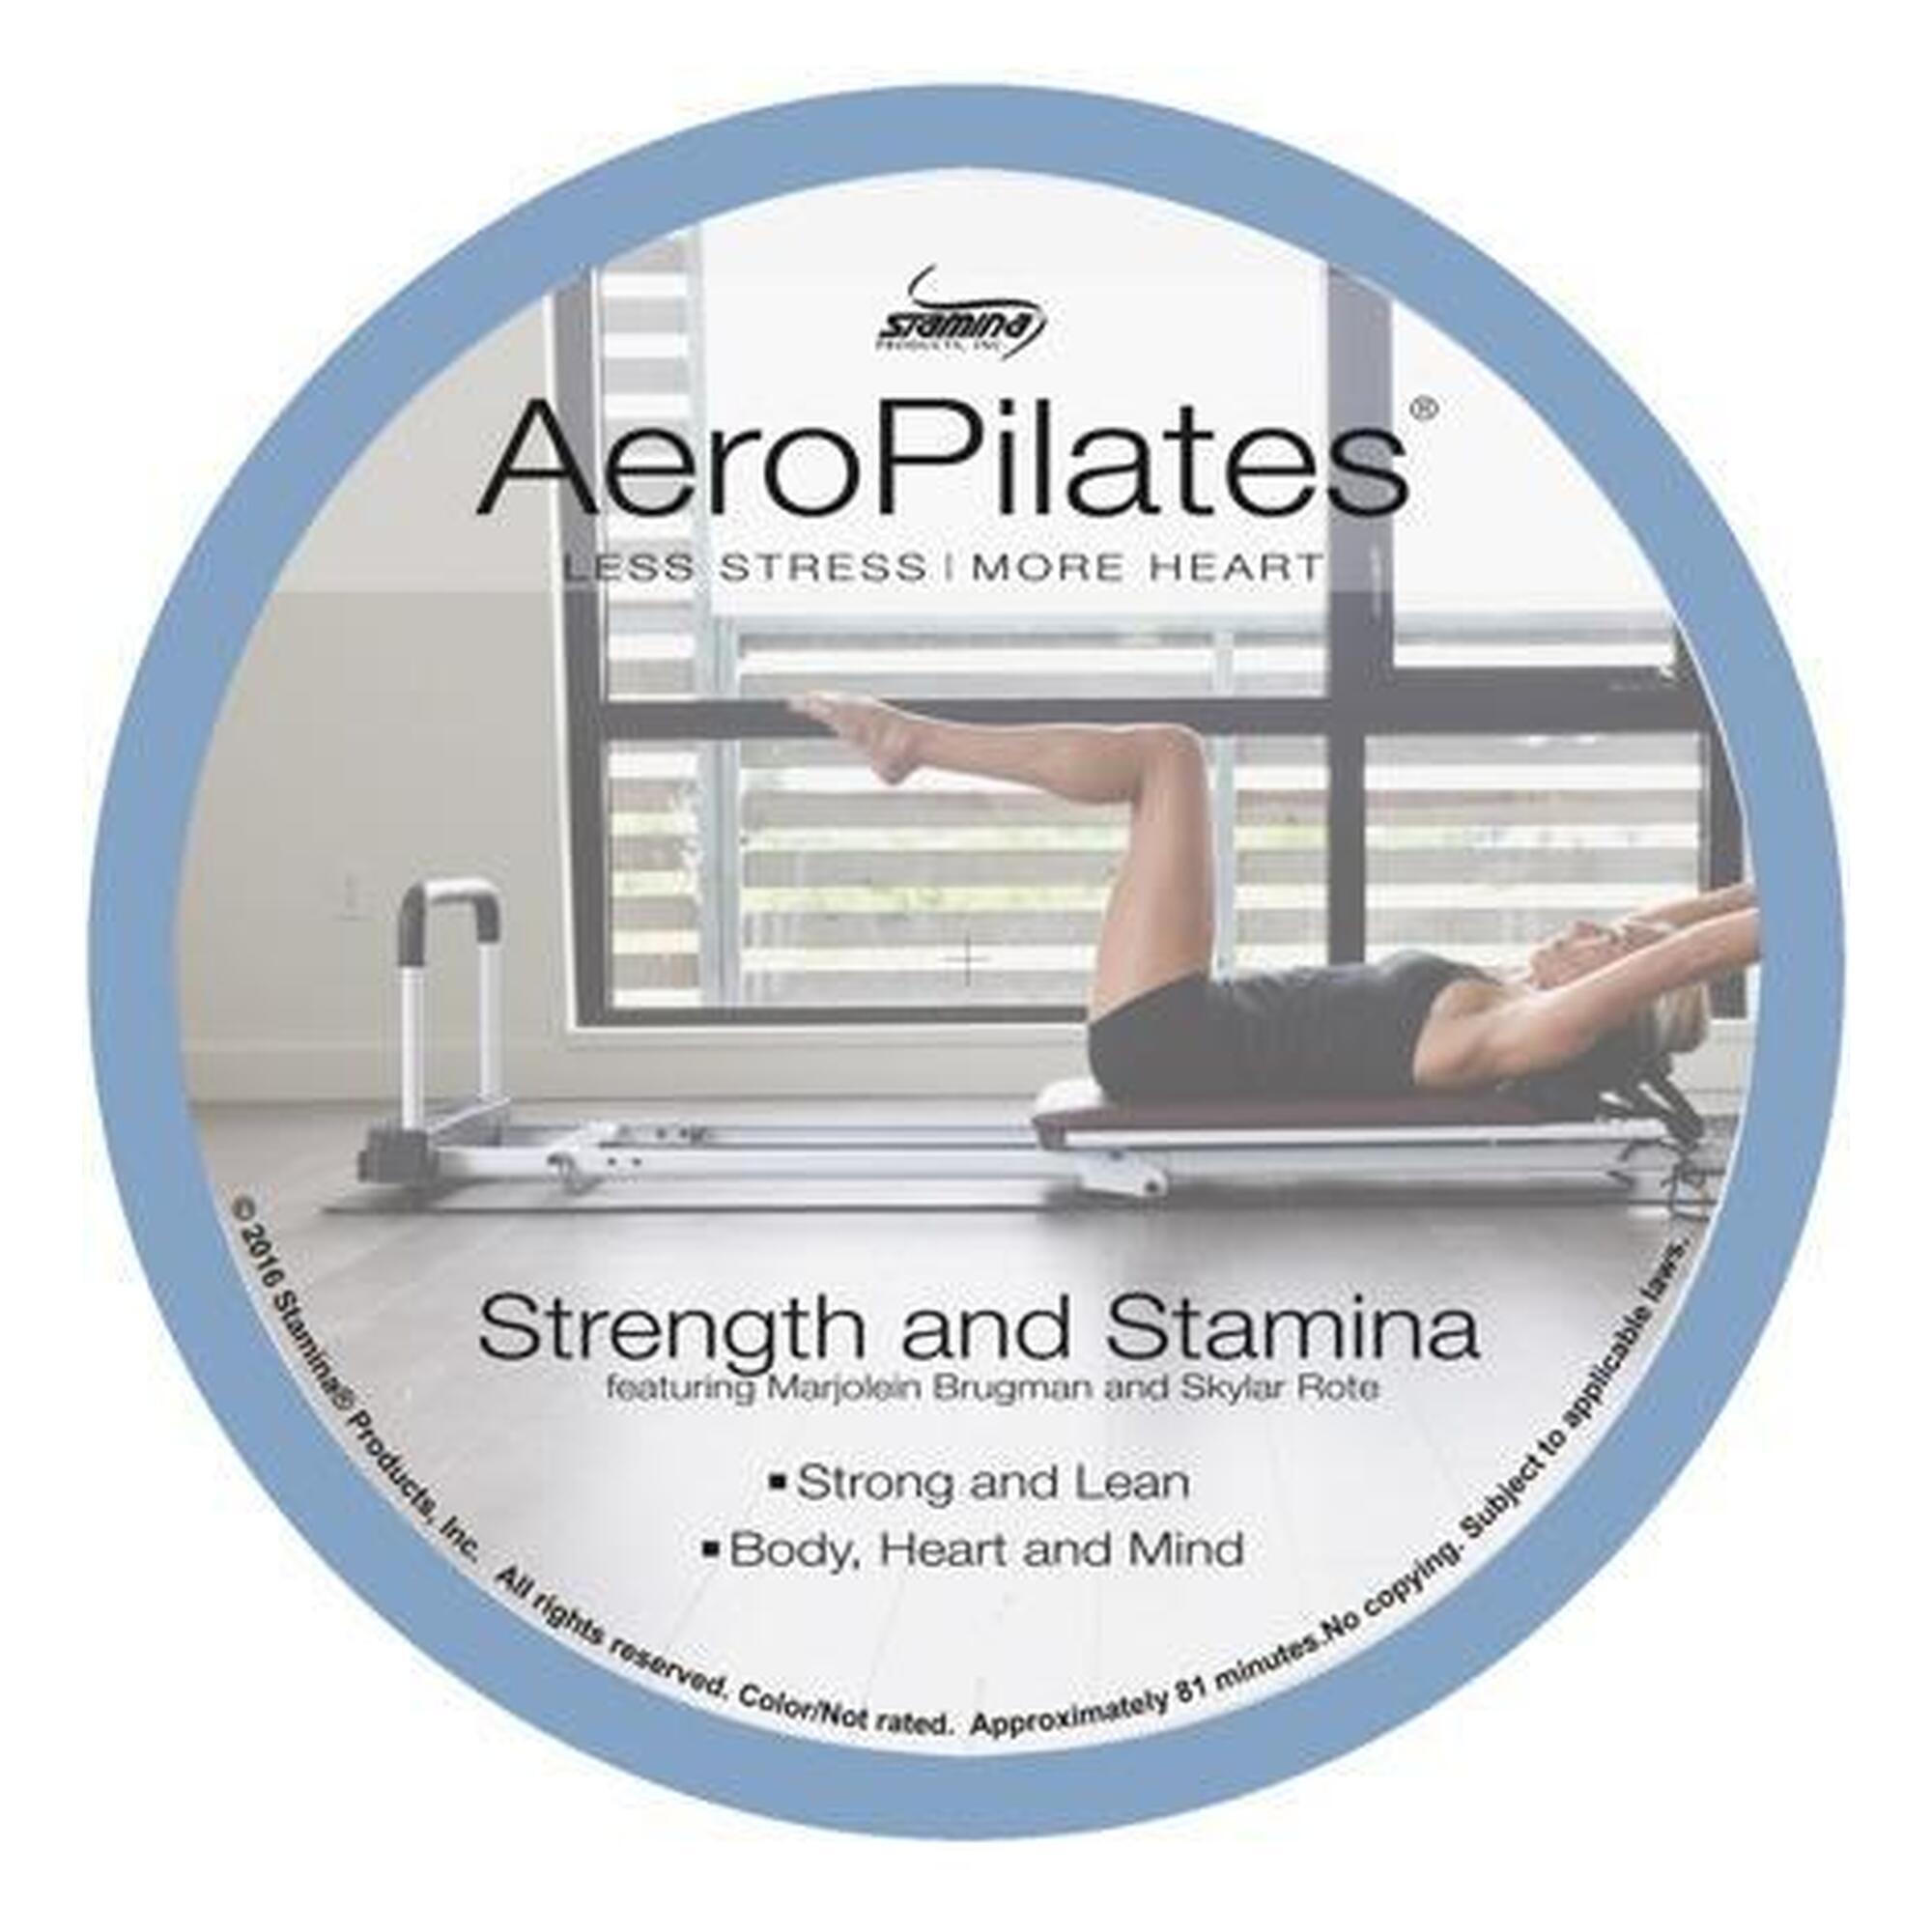 AeroPilates Pilates Strength and Stamina Workout DVD -New series 1/1